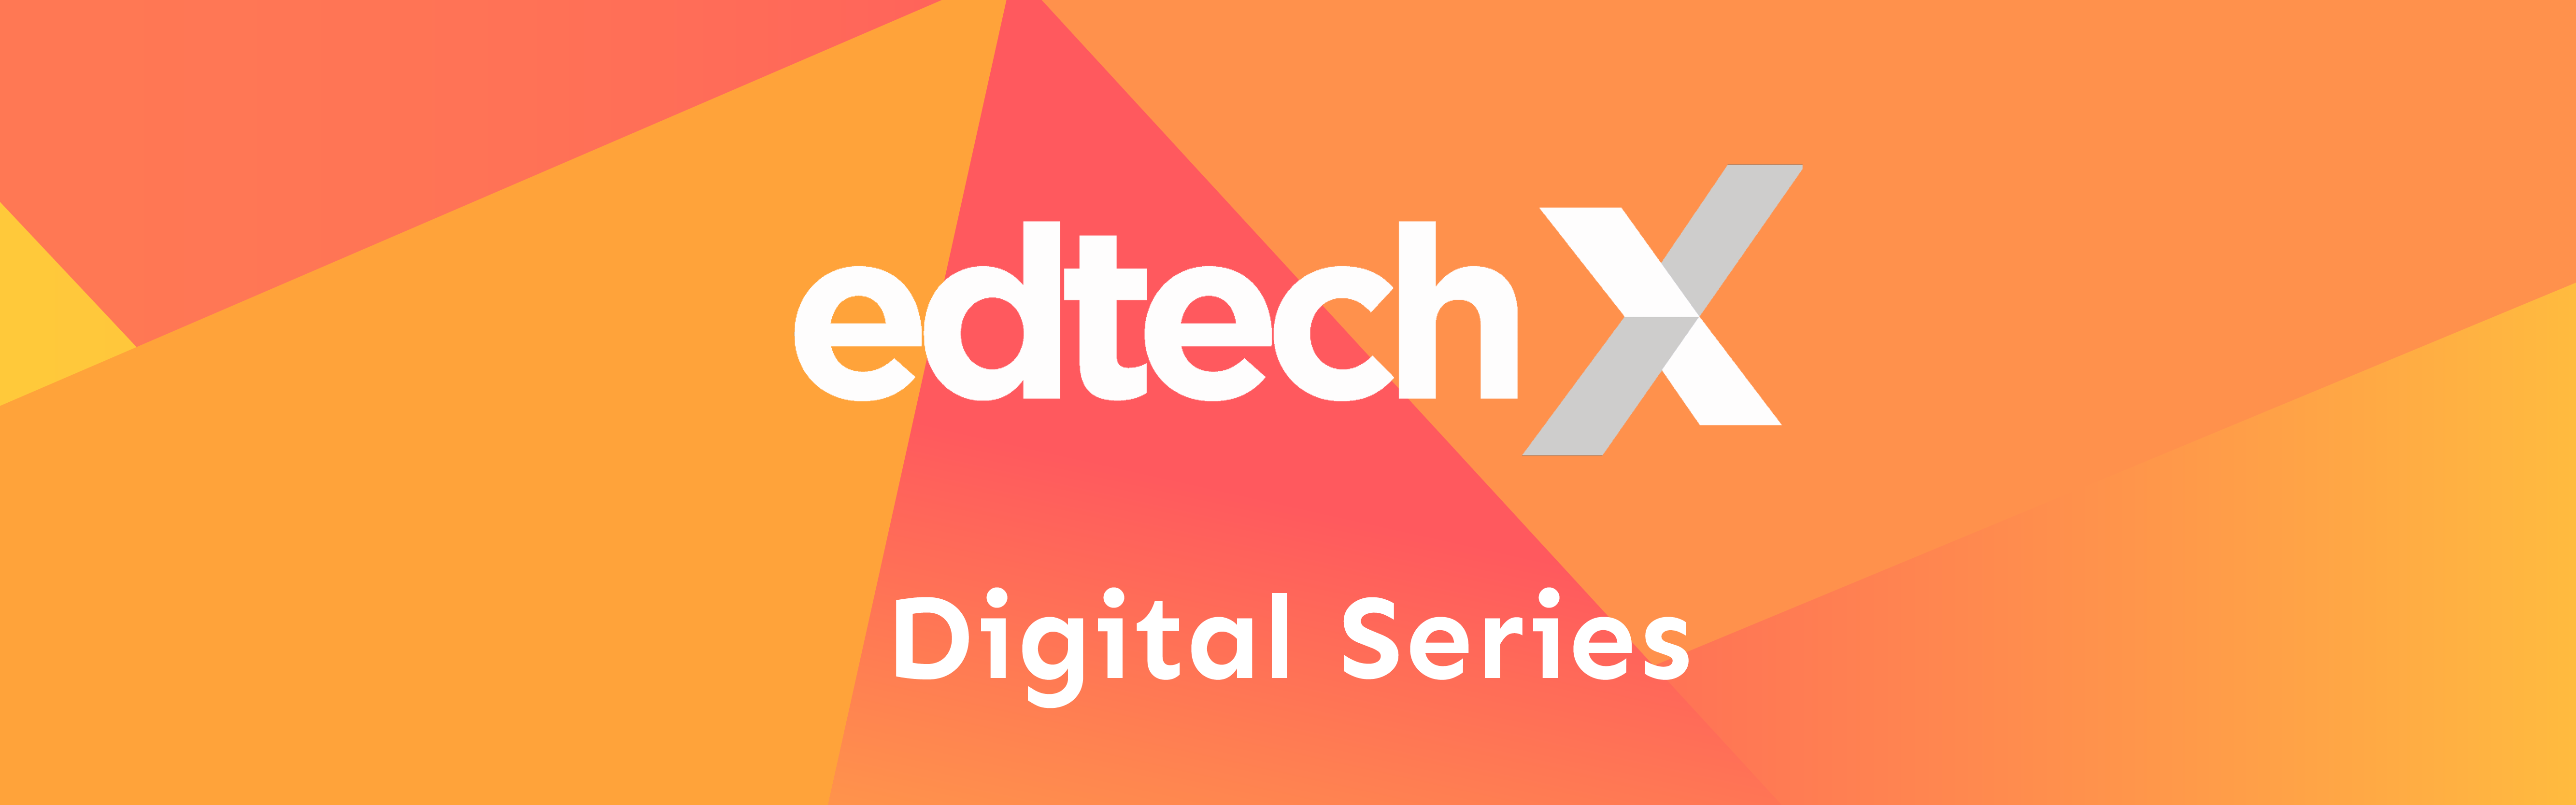 EdTechX Digital Series